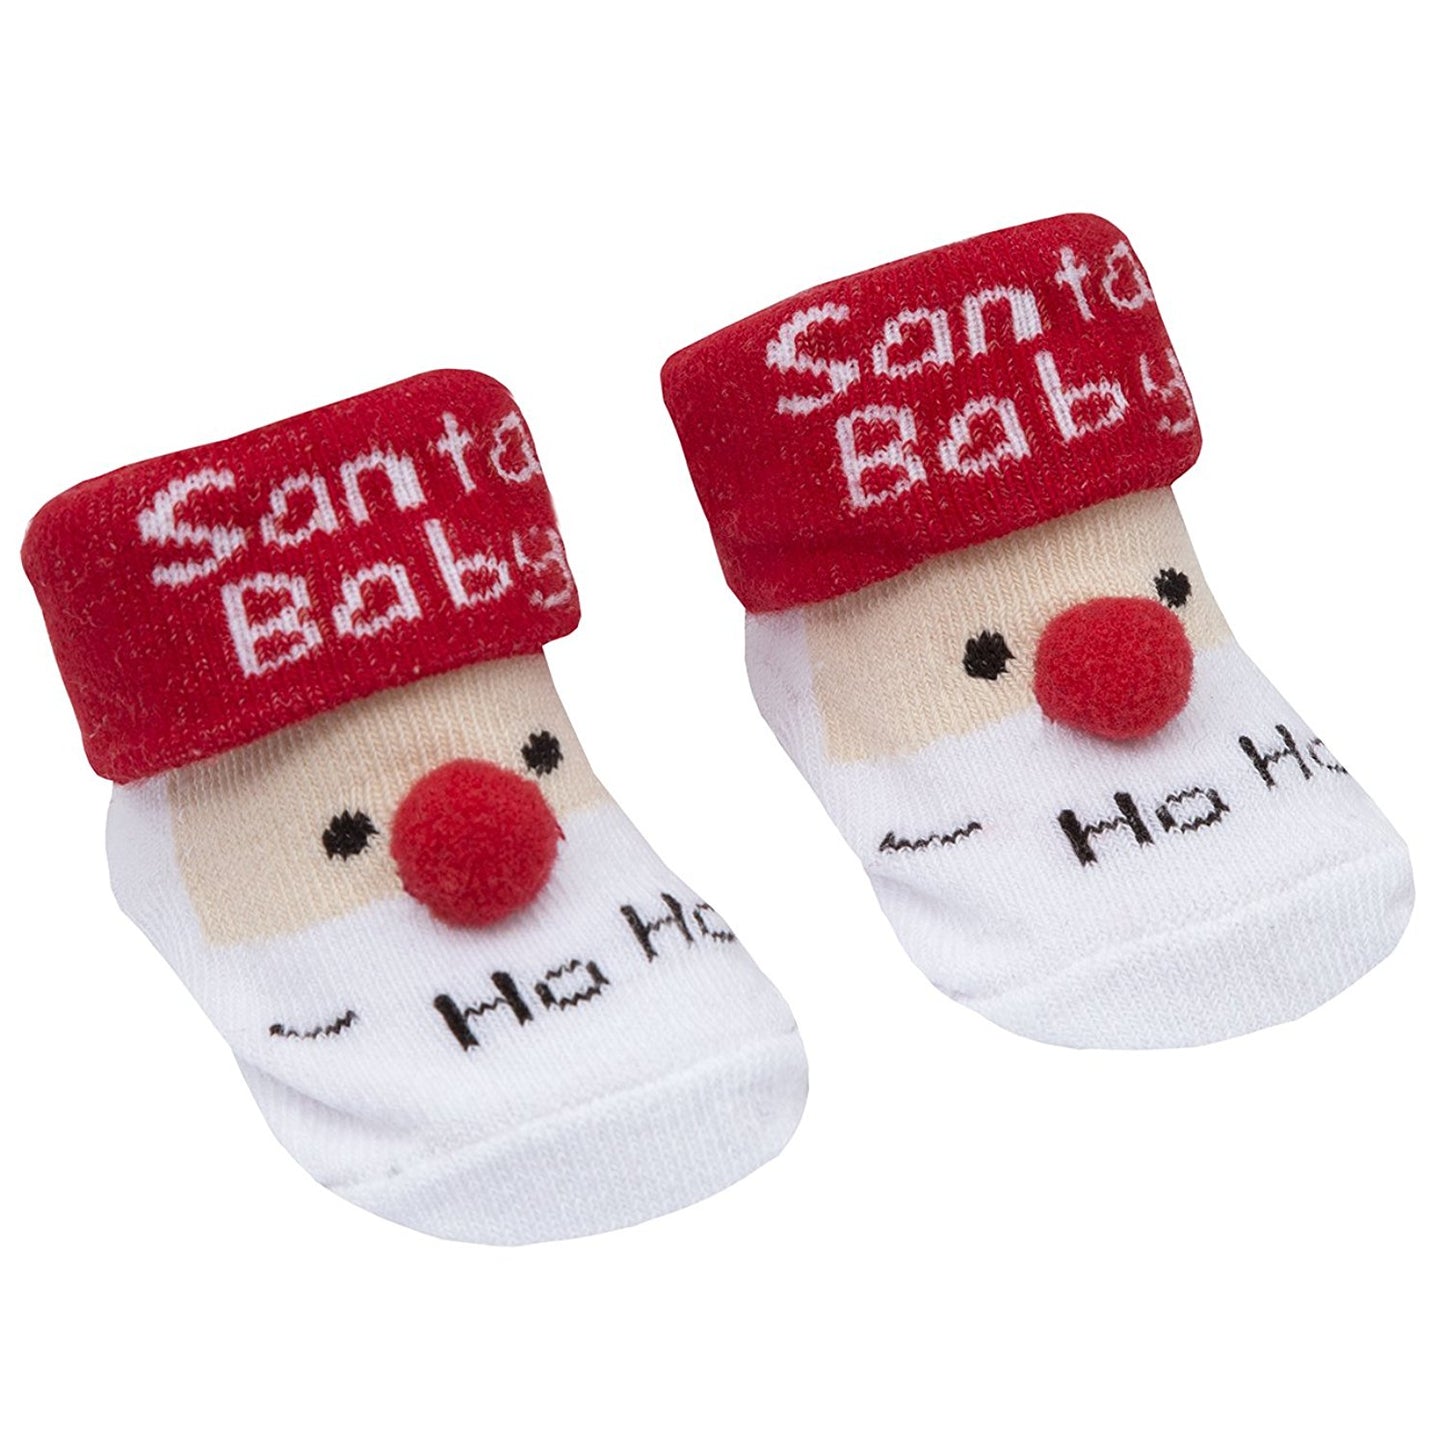 Babytown Festive Christmas Baby Cotton Rich Socks in Tote Bag - hanrattycraftsgifts.co.uk